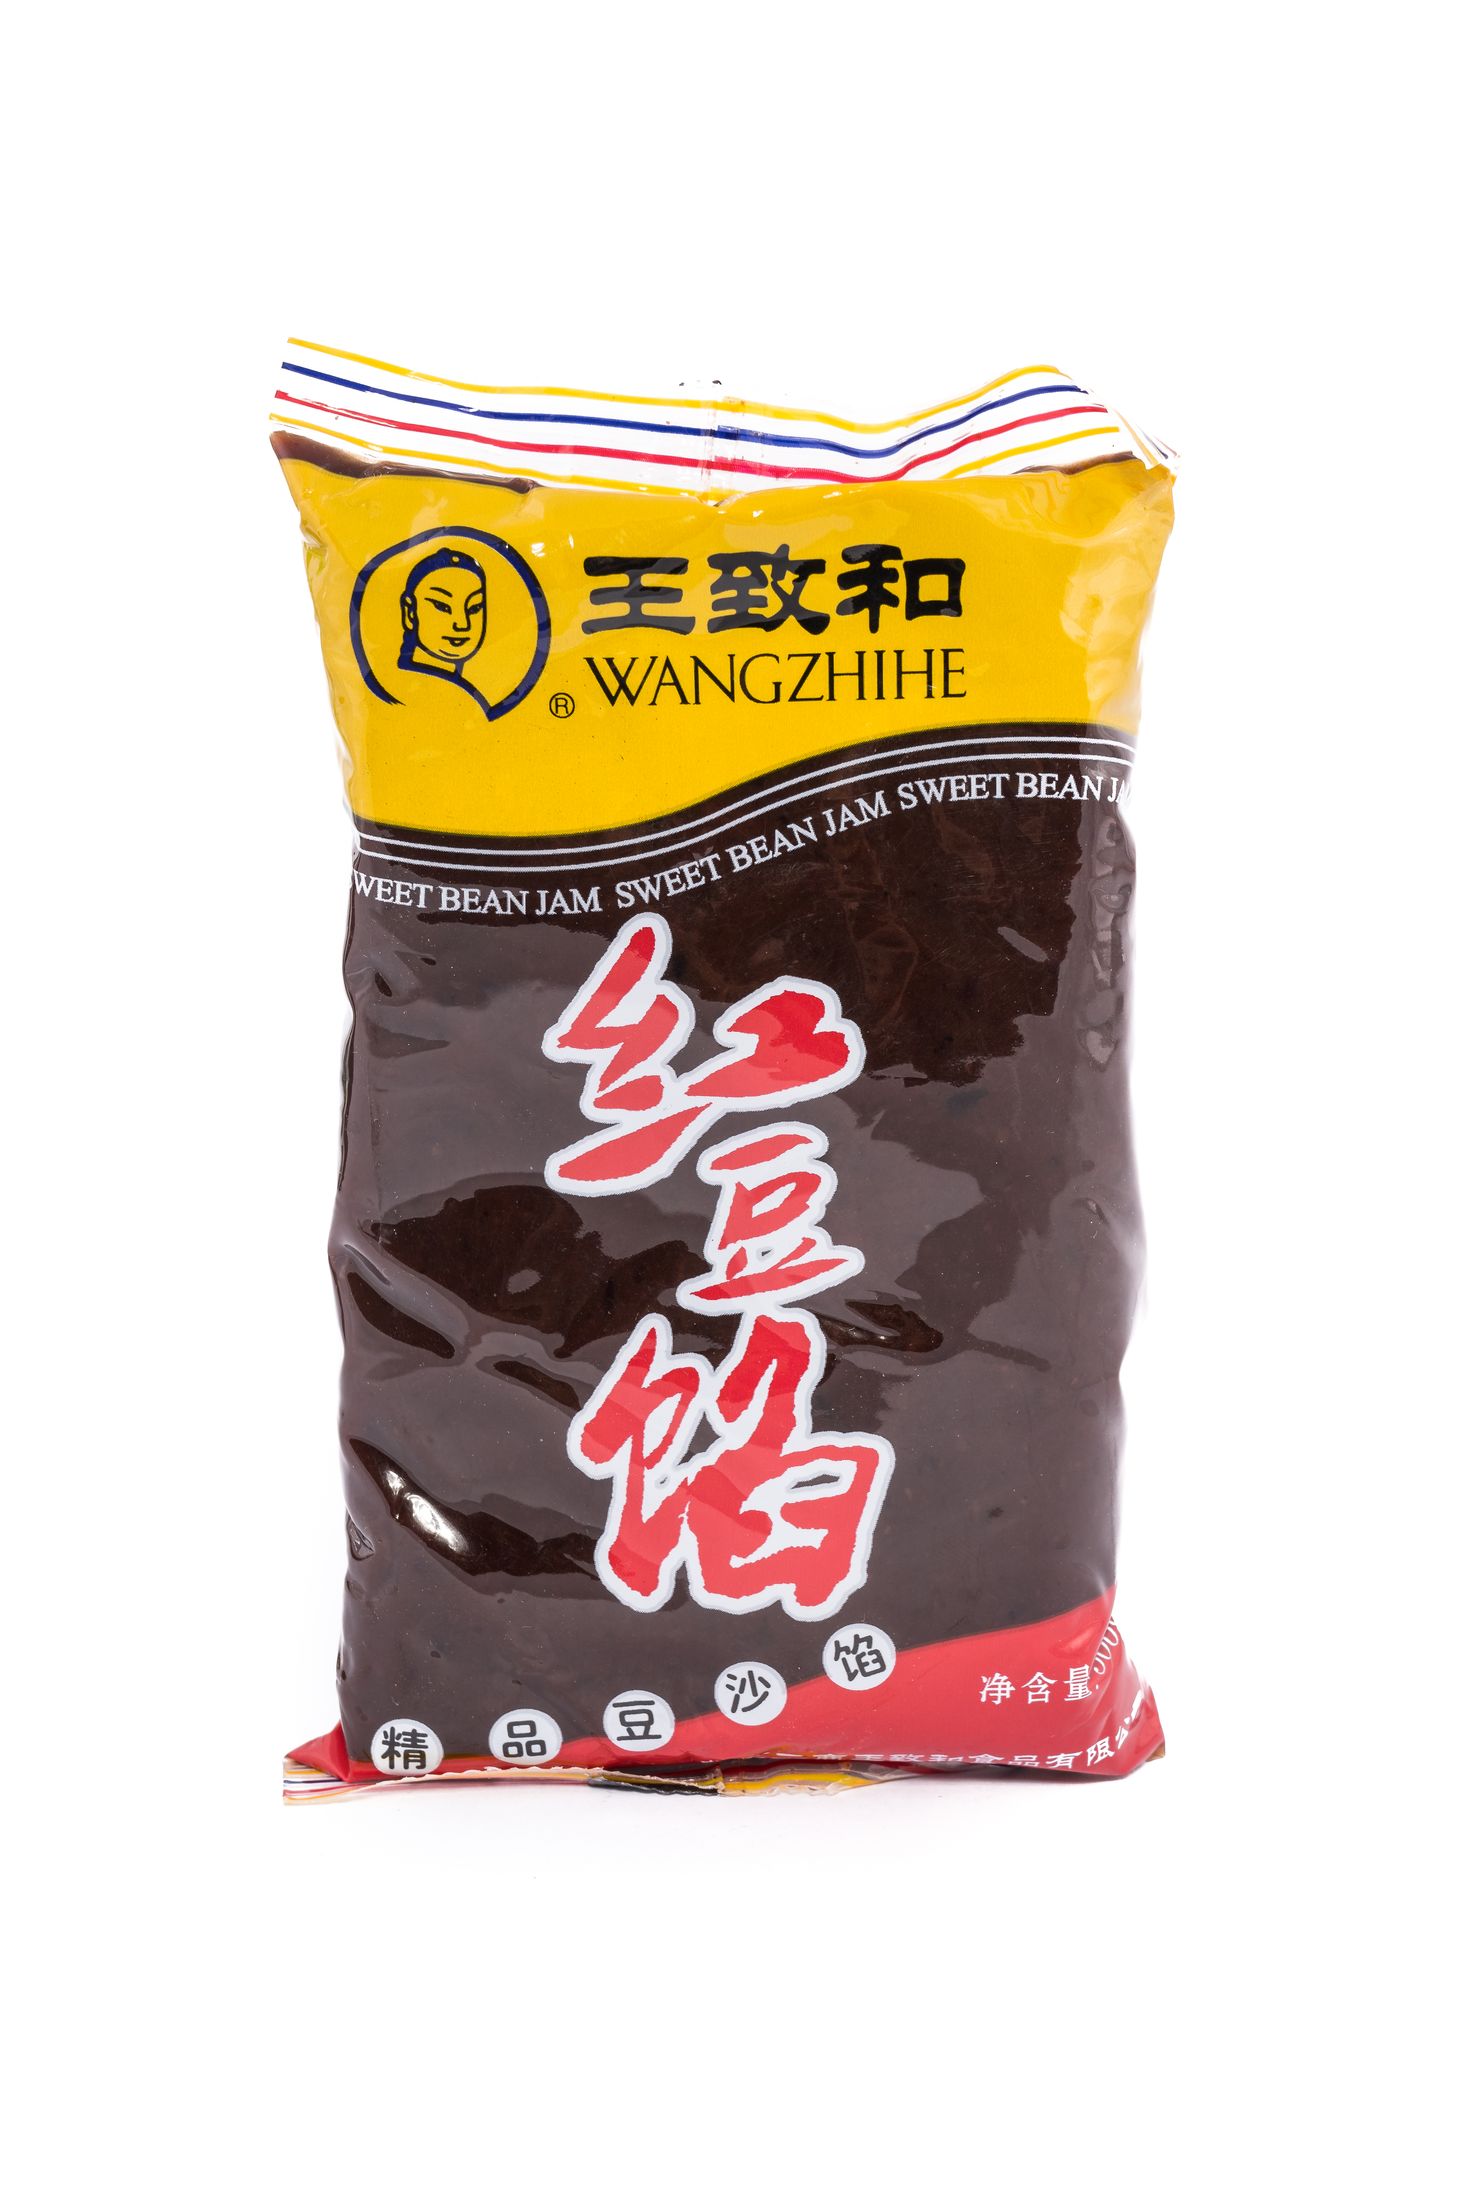 Wangzhihe  Sweet bean jam